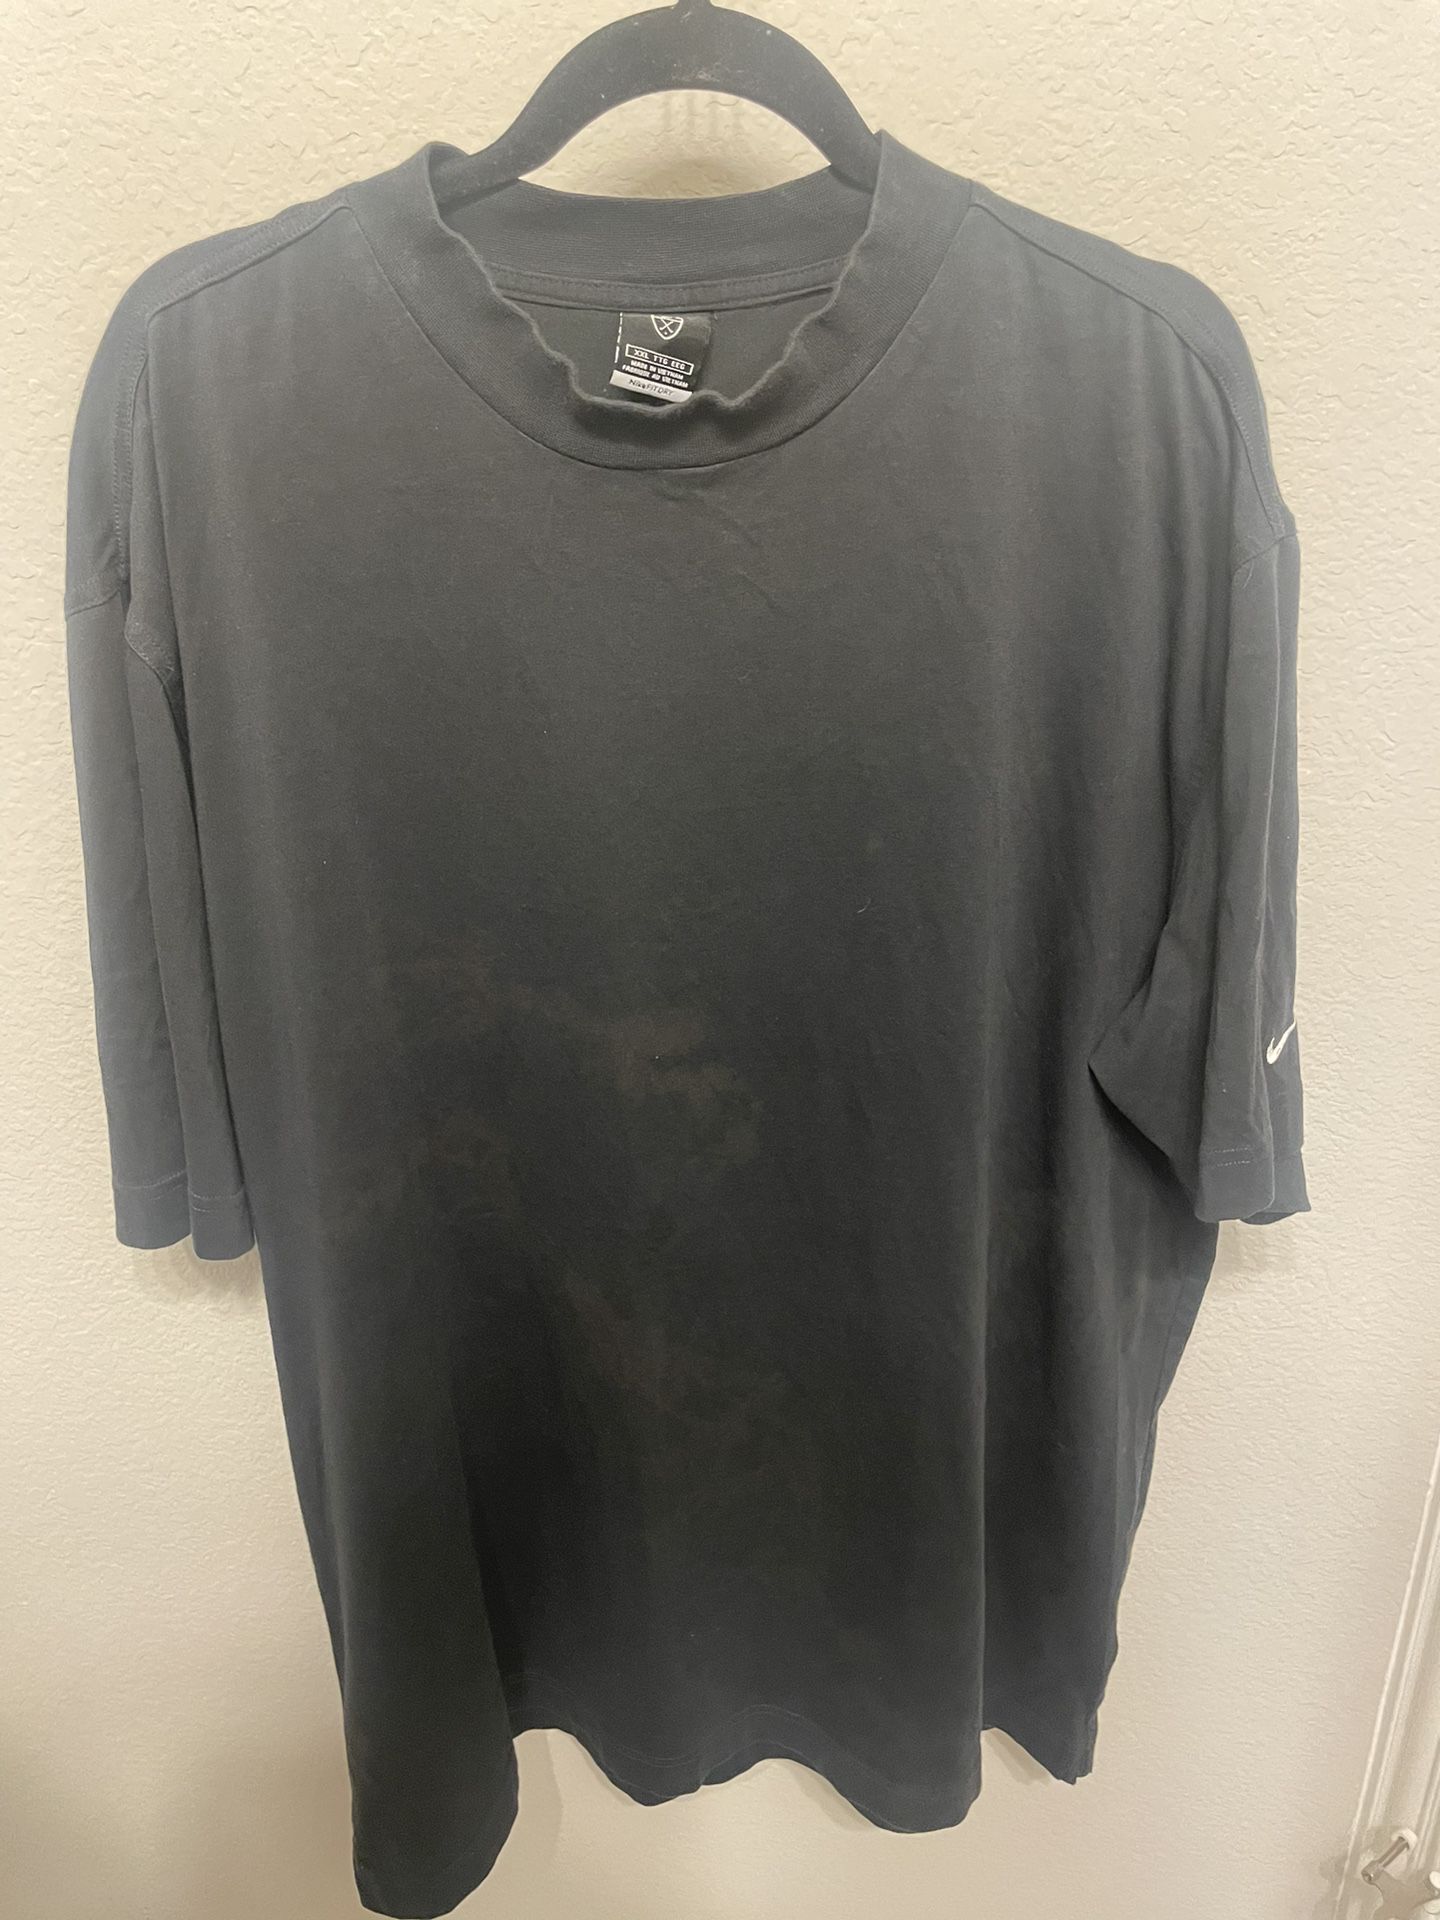 Nike Golf Men’s Fit Dry Black Short Sleeve Shirt, 2XL